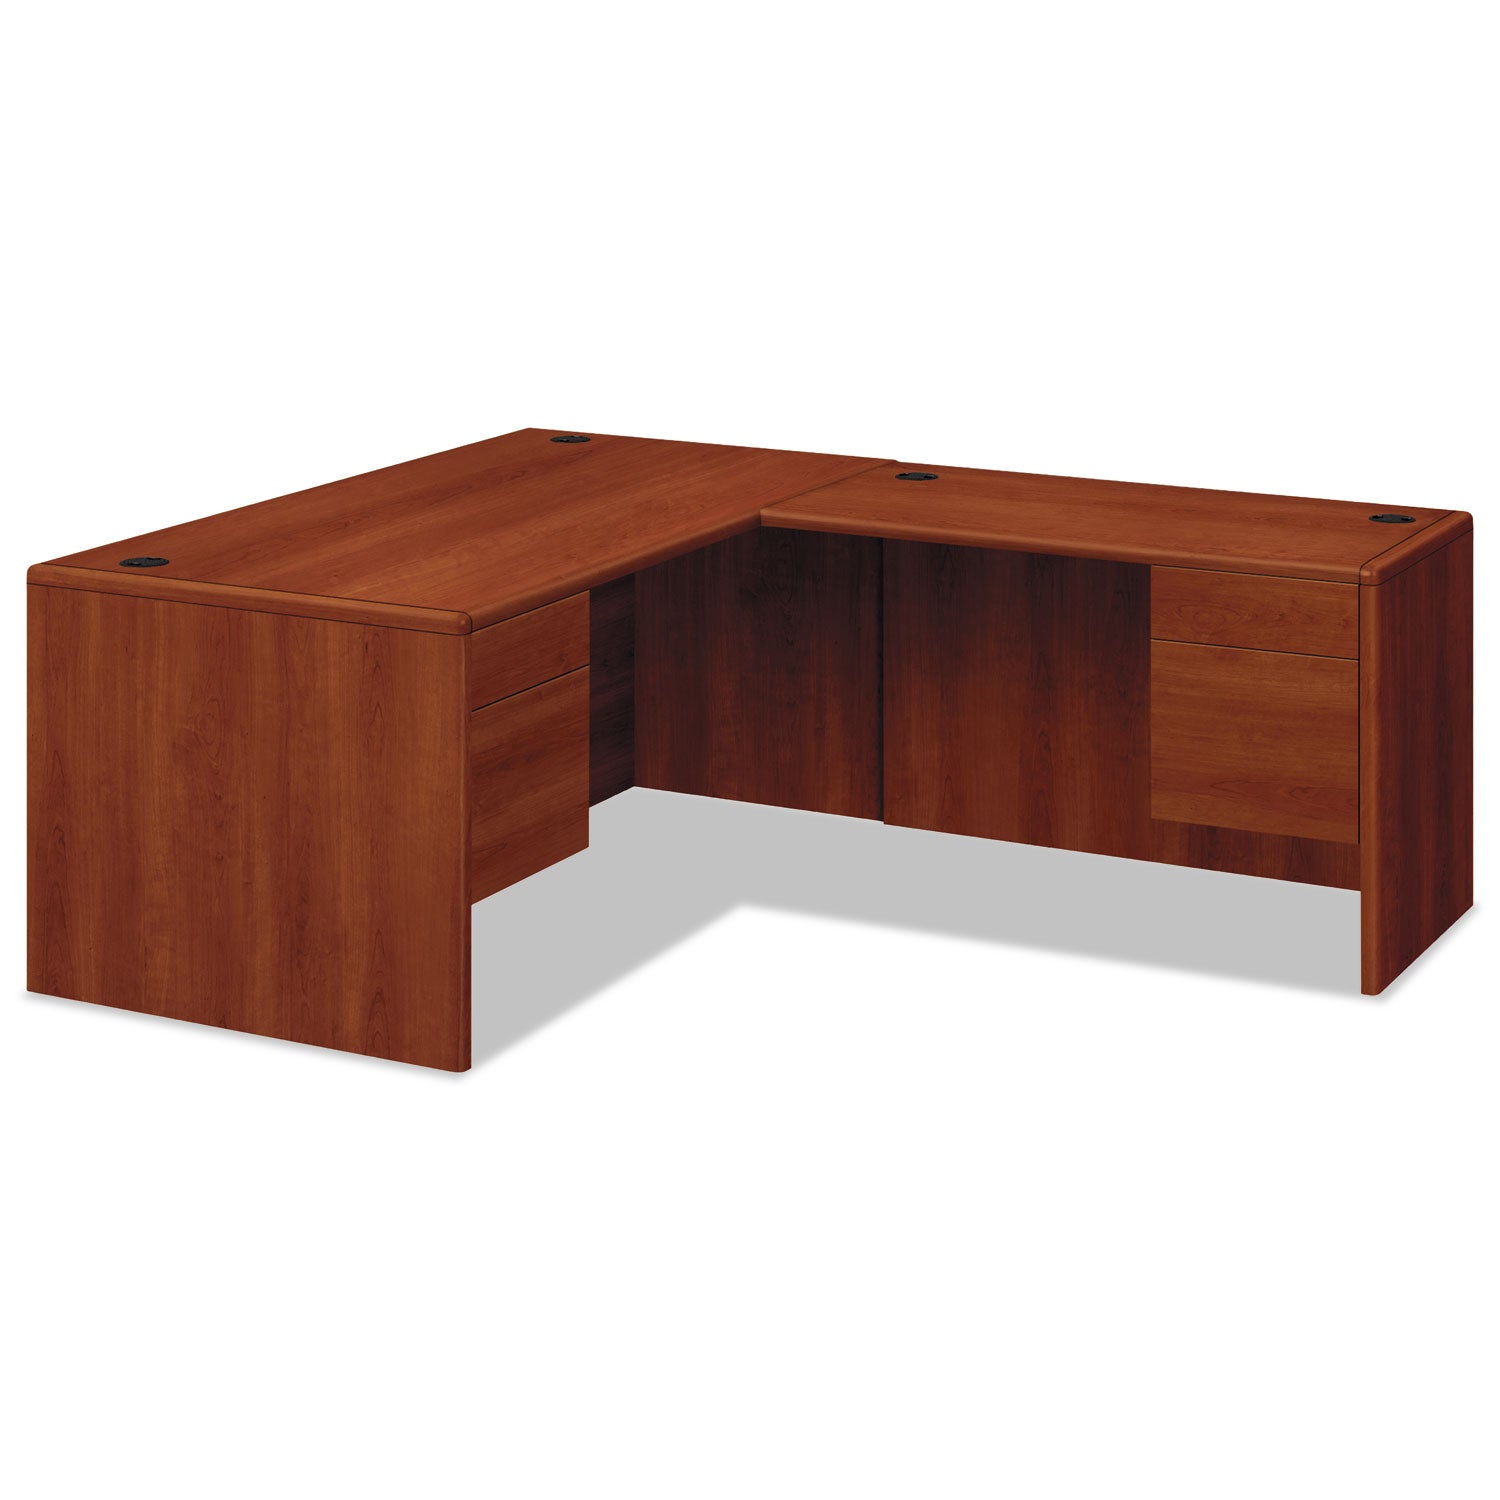 10700 Series "L" Workstation Desk with Three-Quarter Height Pedestal on Left, 66" x 30" x 29.5", Cognac - 